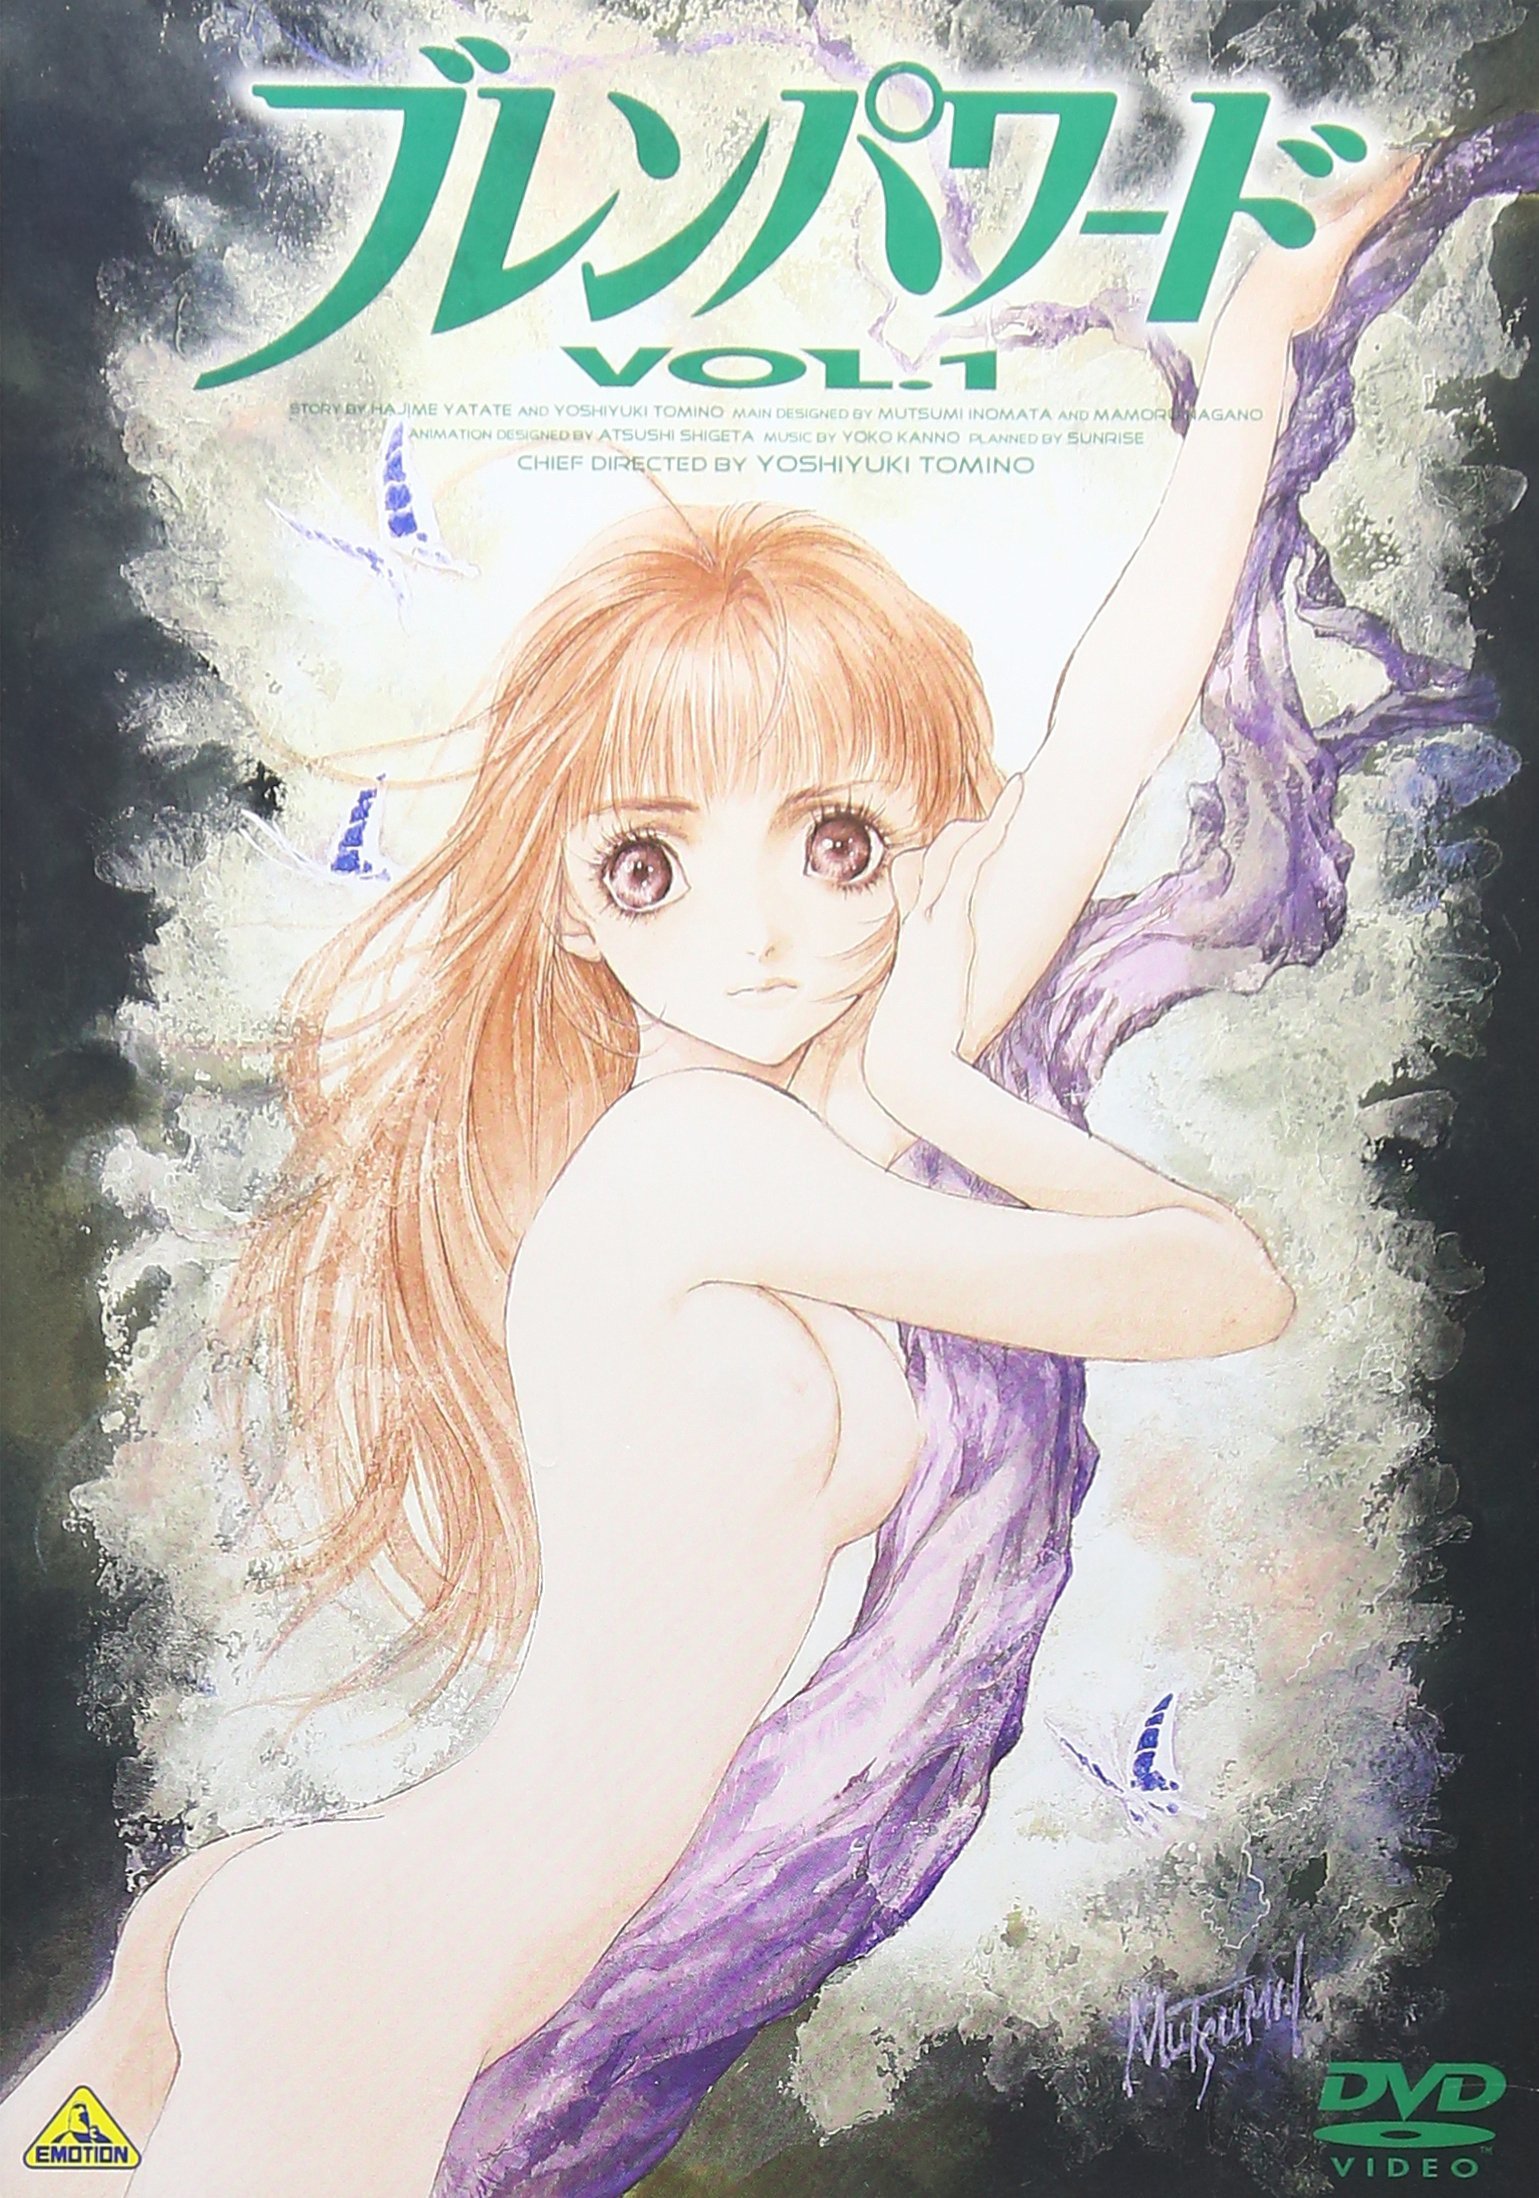 Brain Powerd: Volume 1 DVD (ブレンパワード) (Japan)